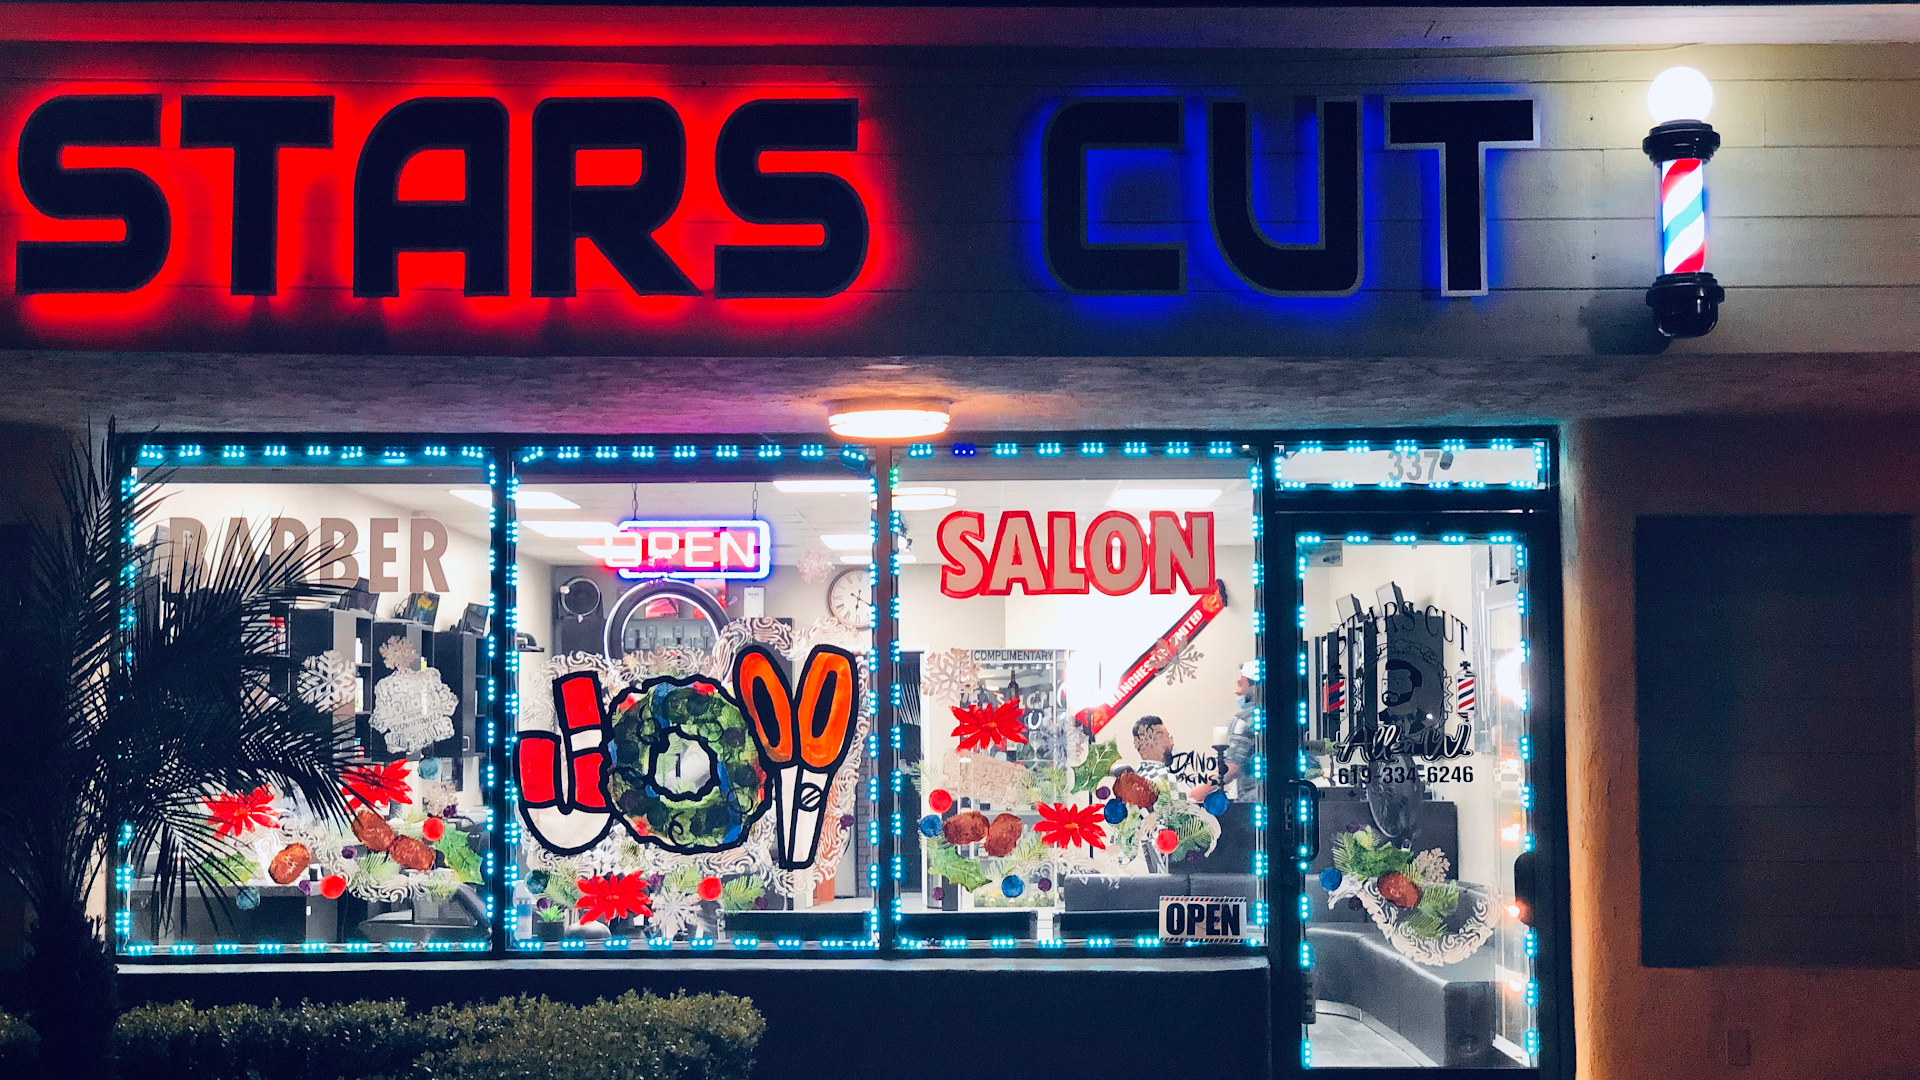 Stars cut barber shop